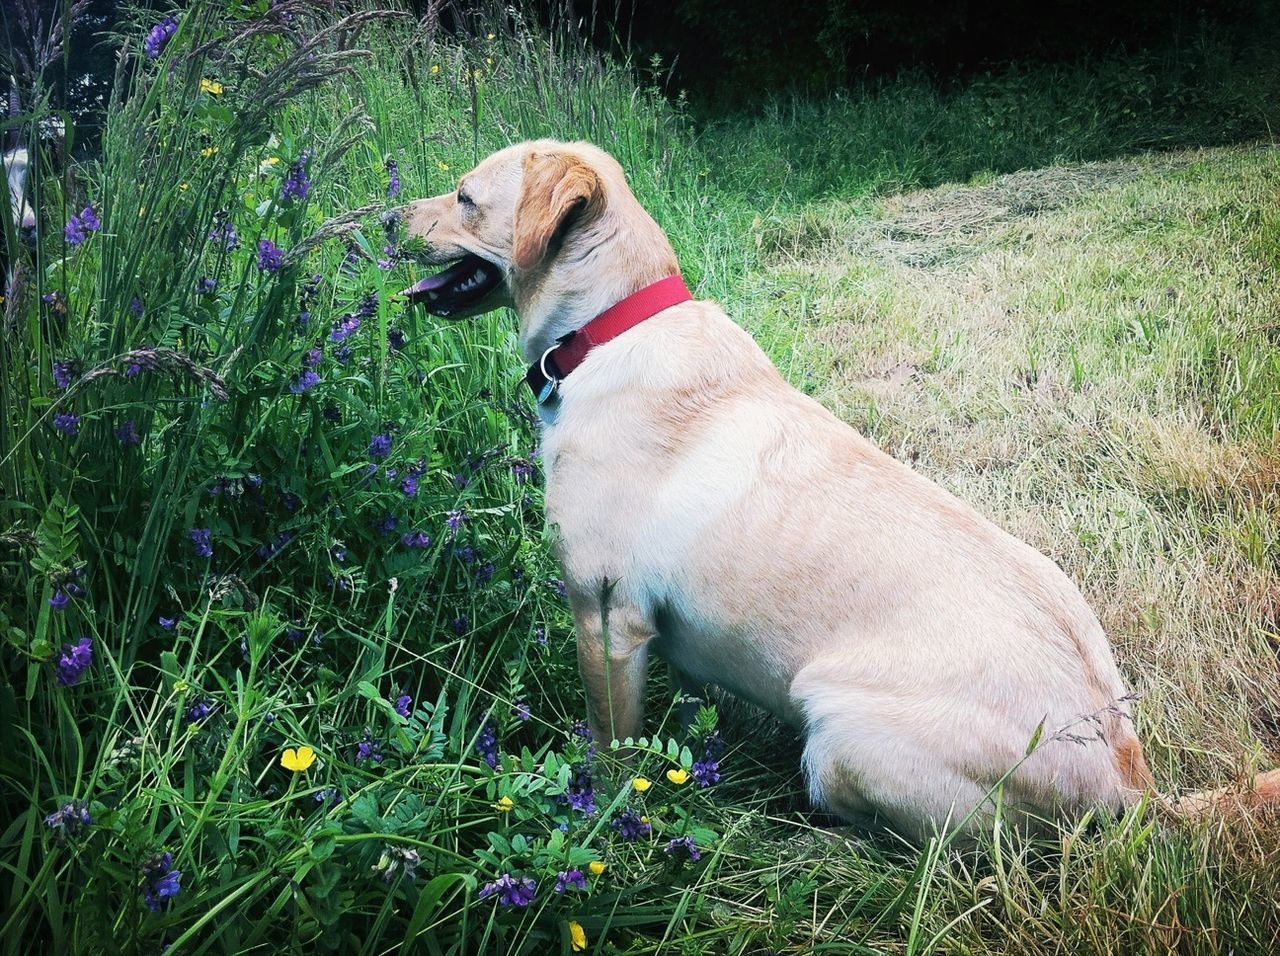 Side view of dog sitting on grassy field